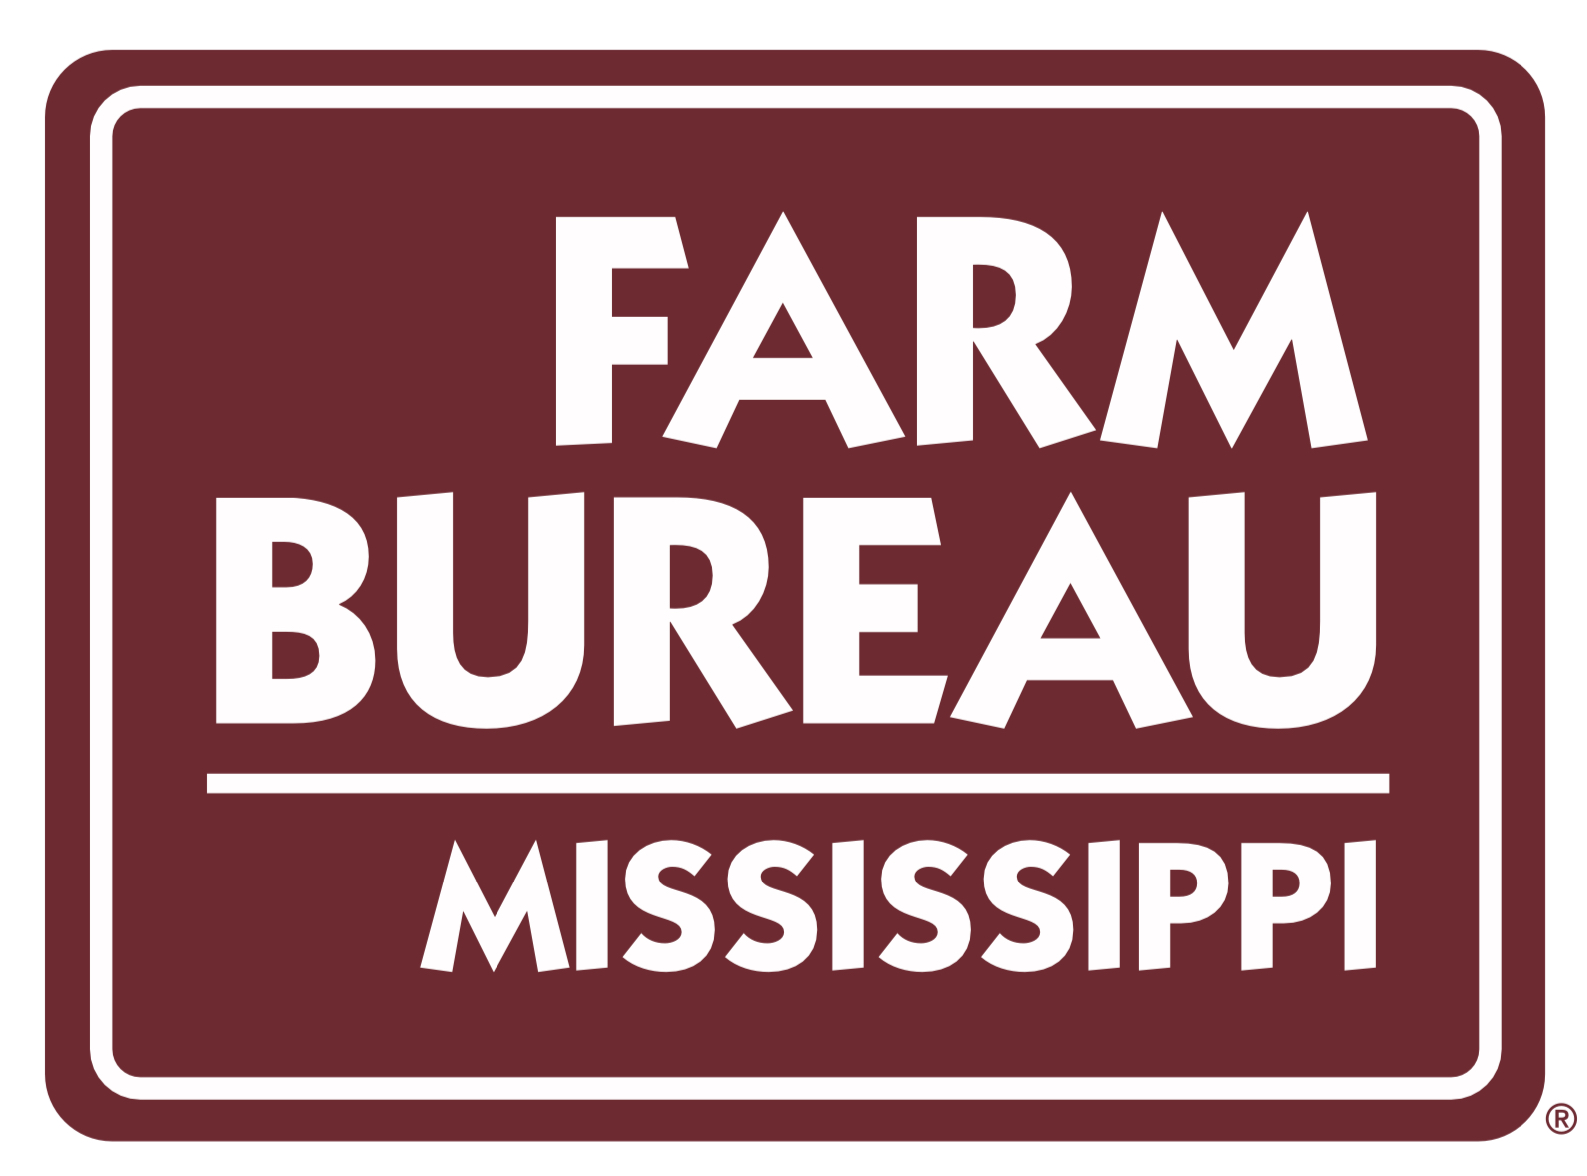 Mississippi Farm Bureau logo